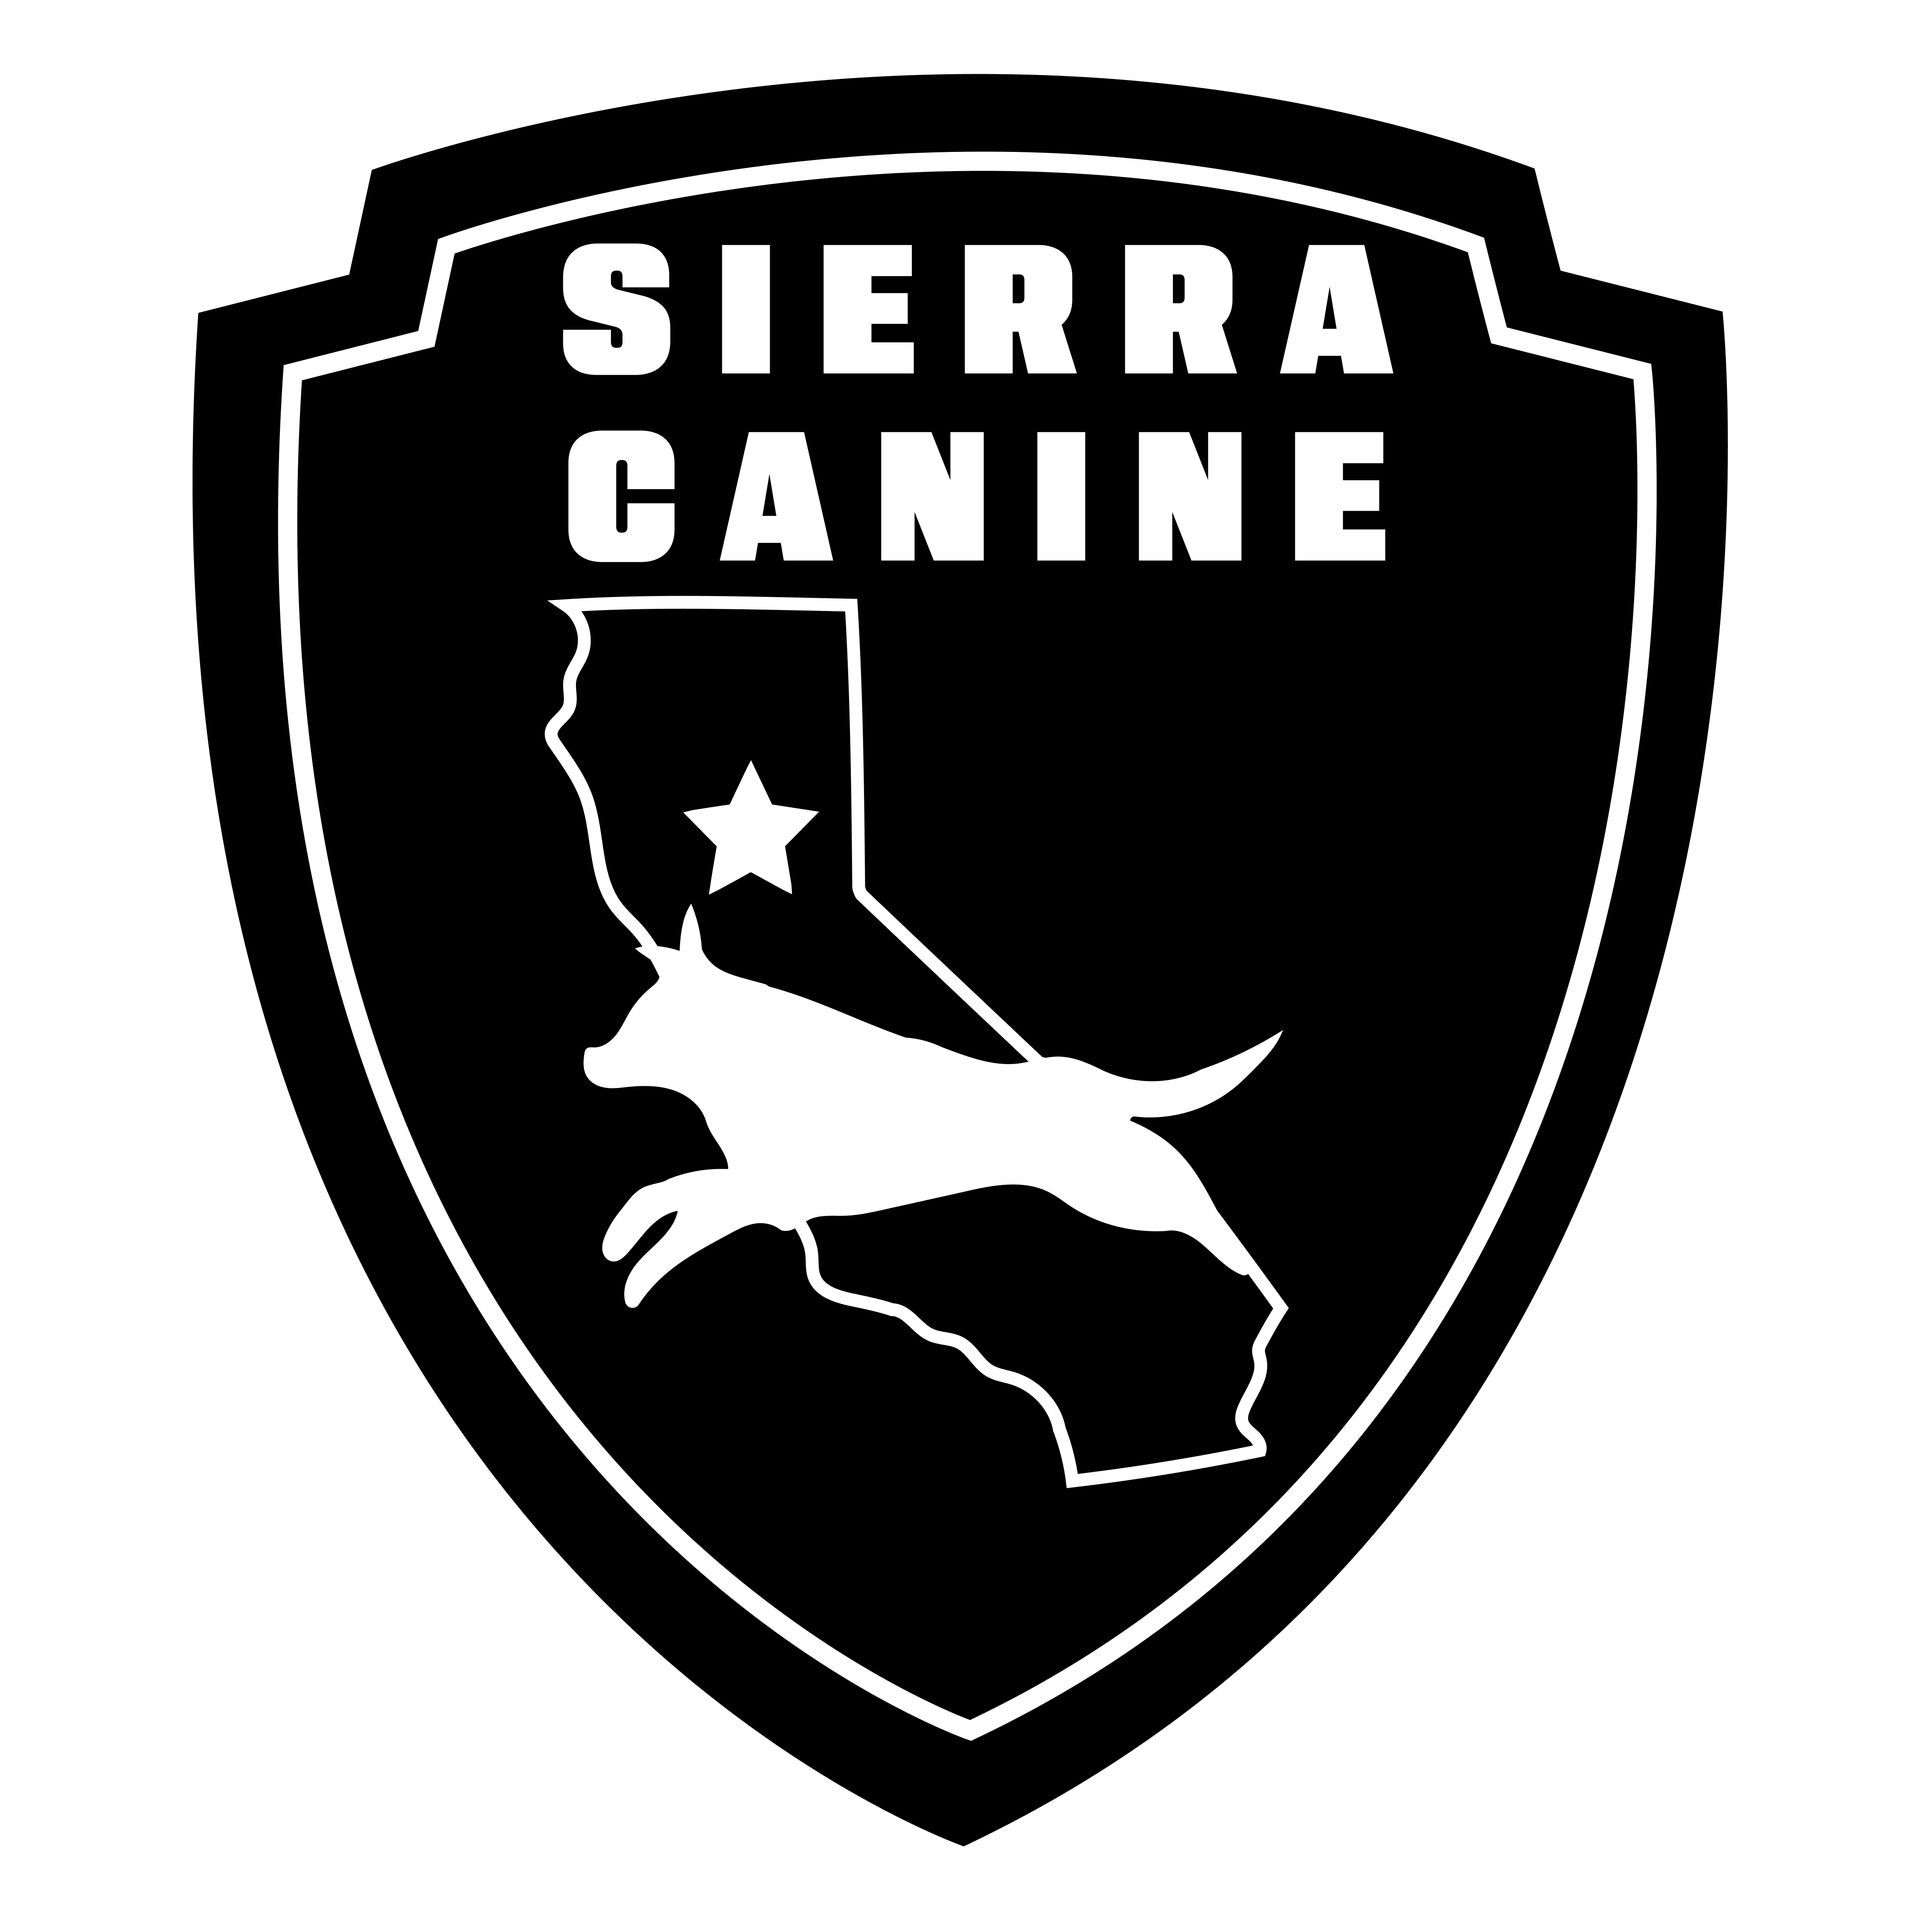 Sierra Canine, 530-418-9898, dog obedience training chico ca, Sierra Canine logo